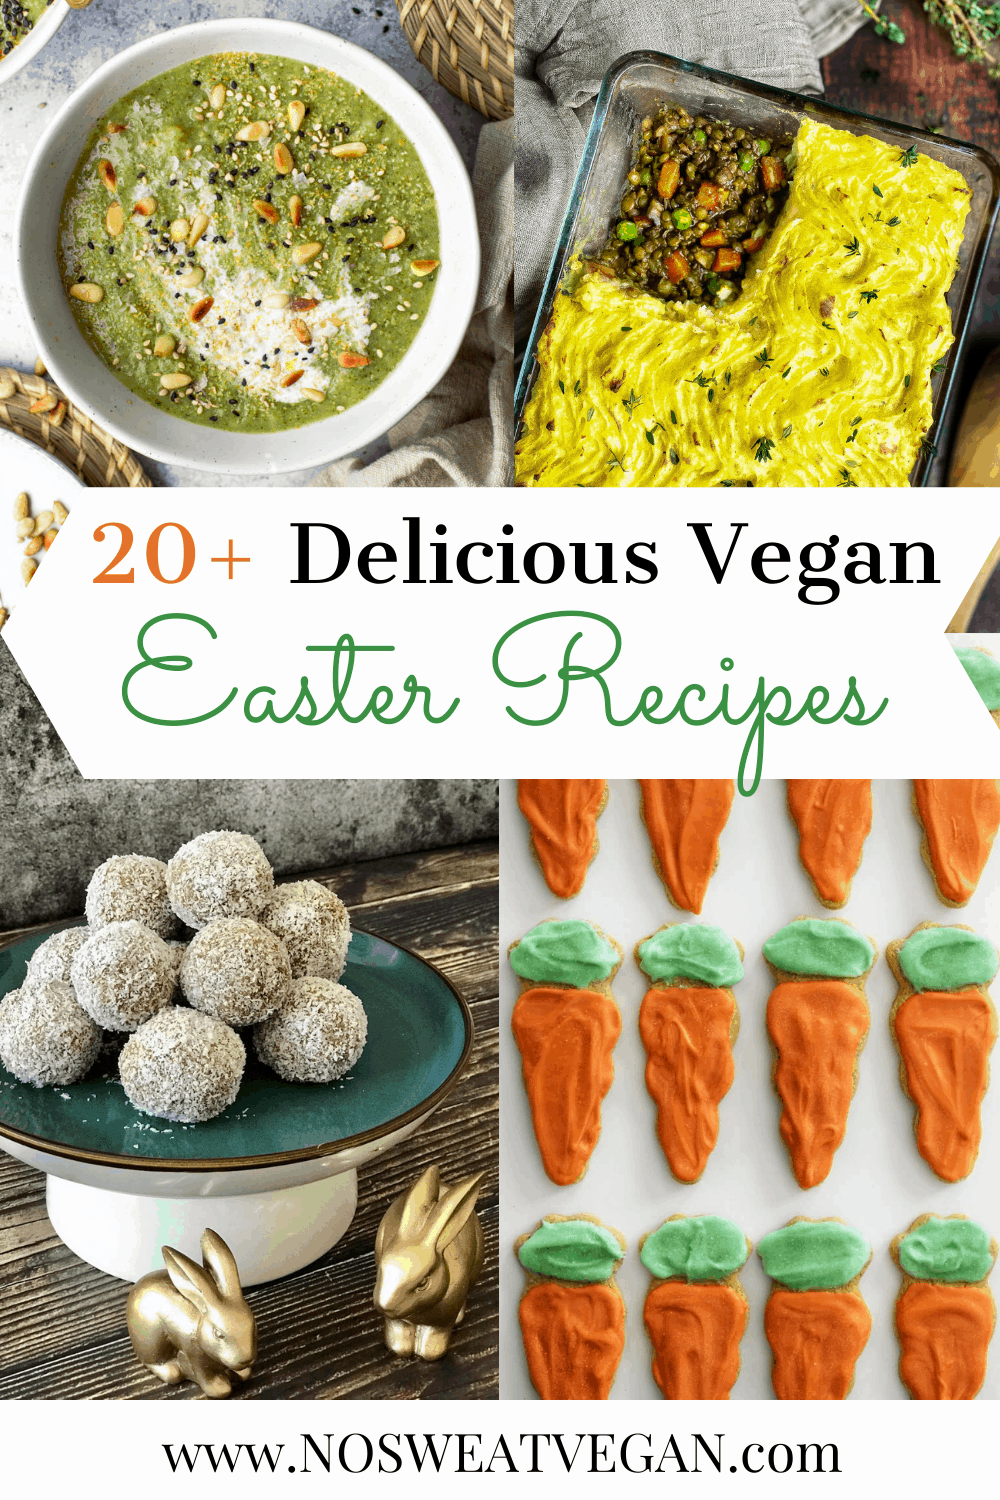 Vegan Easter recipes collage.